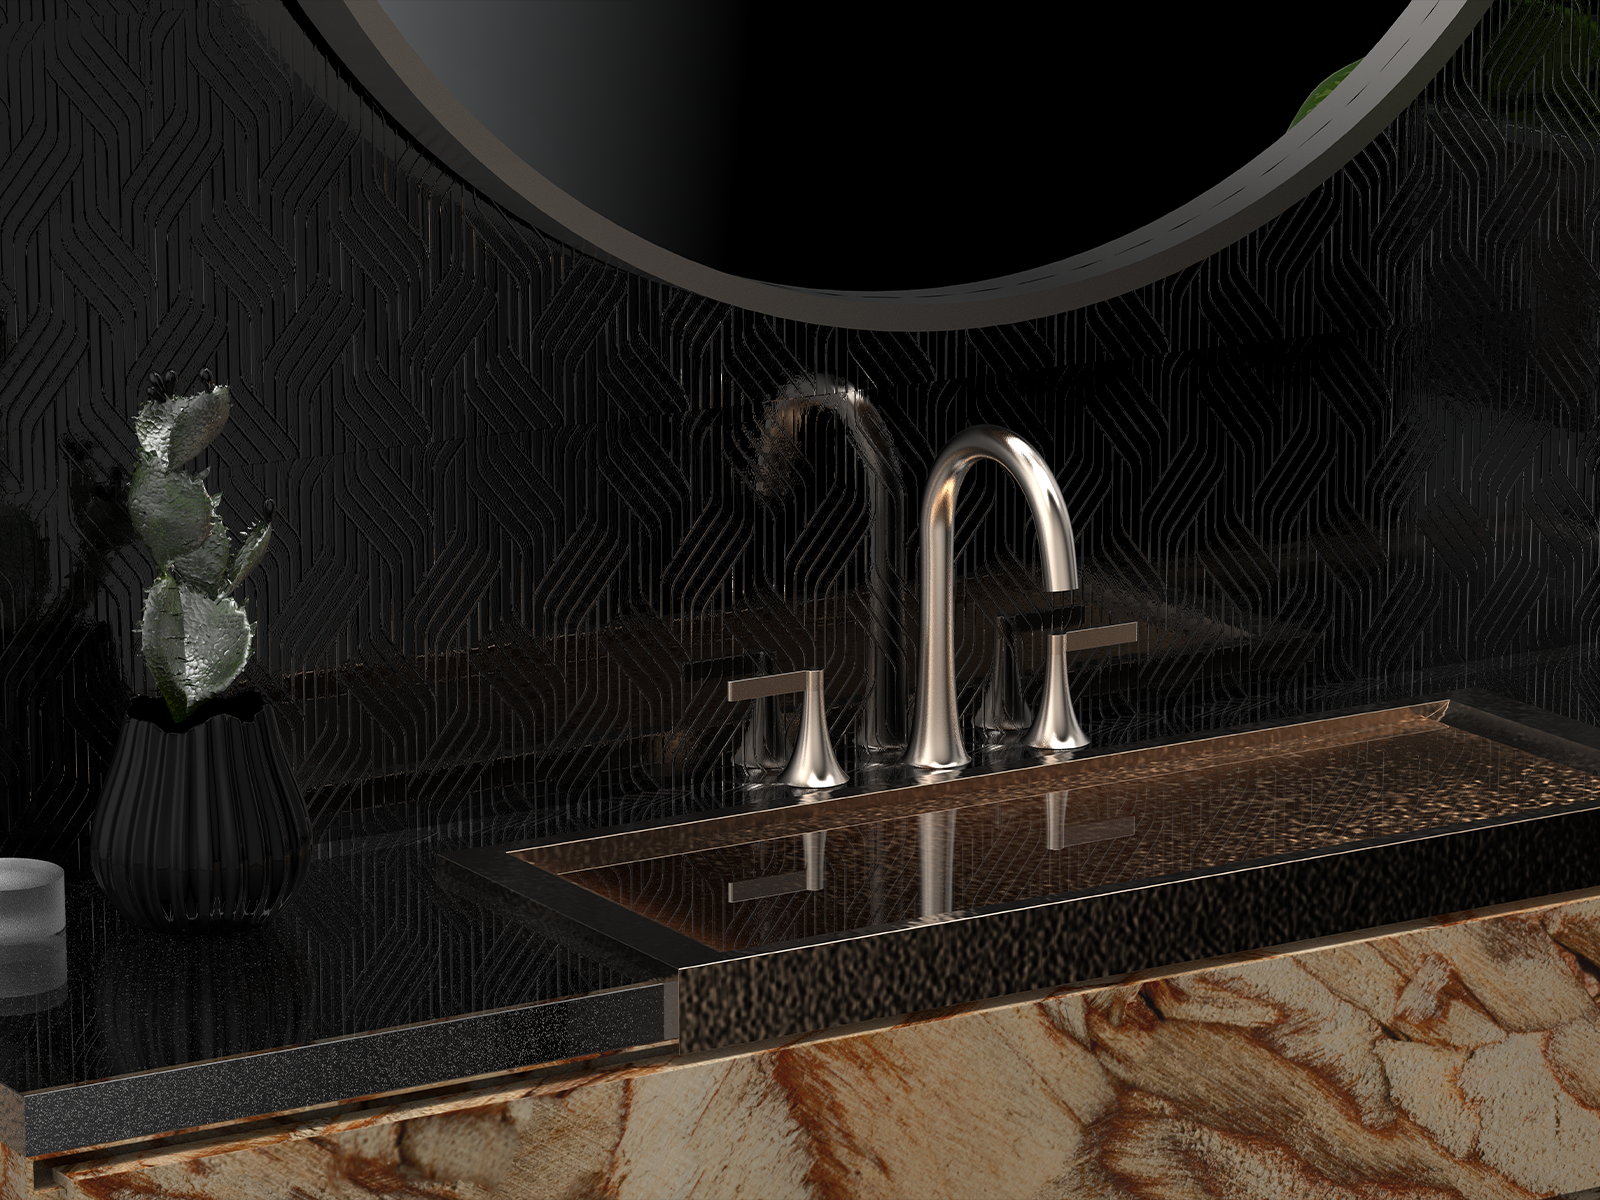 Simple high curve Baropue style spout Design Widespread Luxury Faucet from Santec Faucet